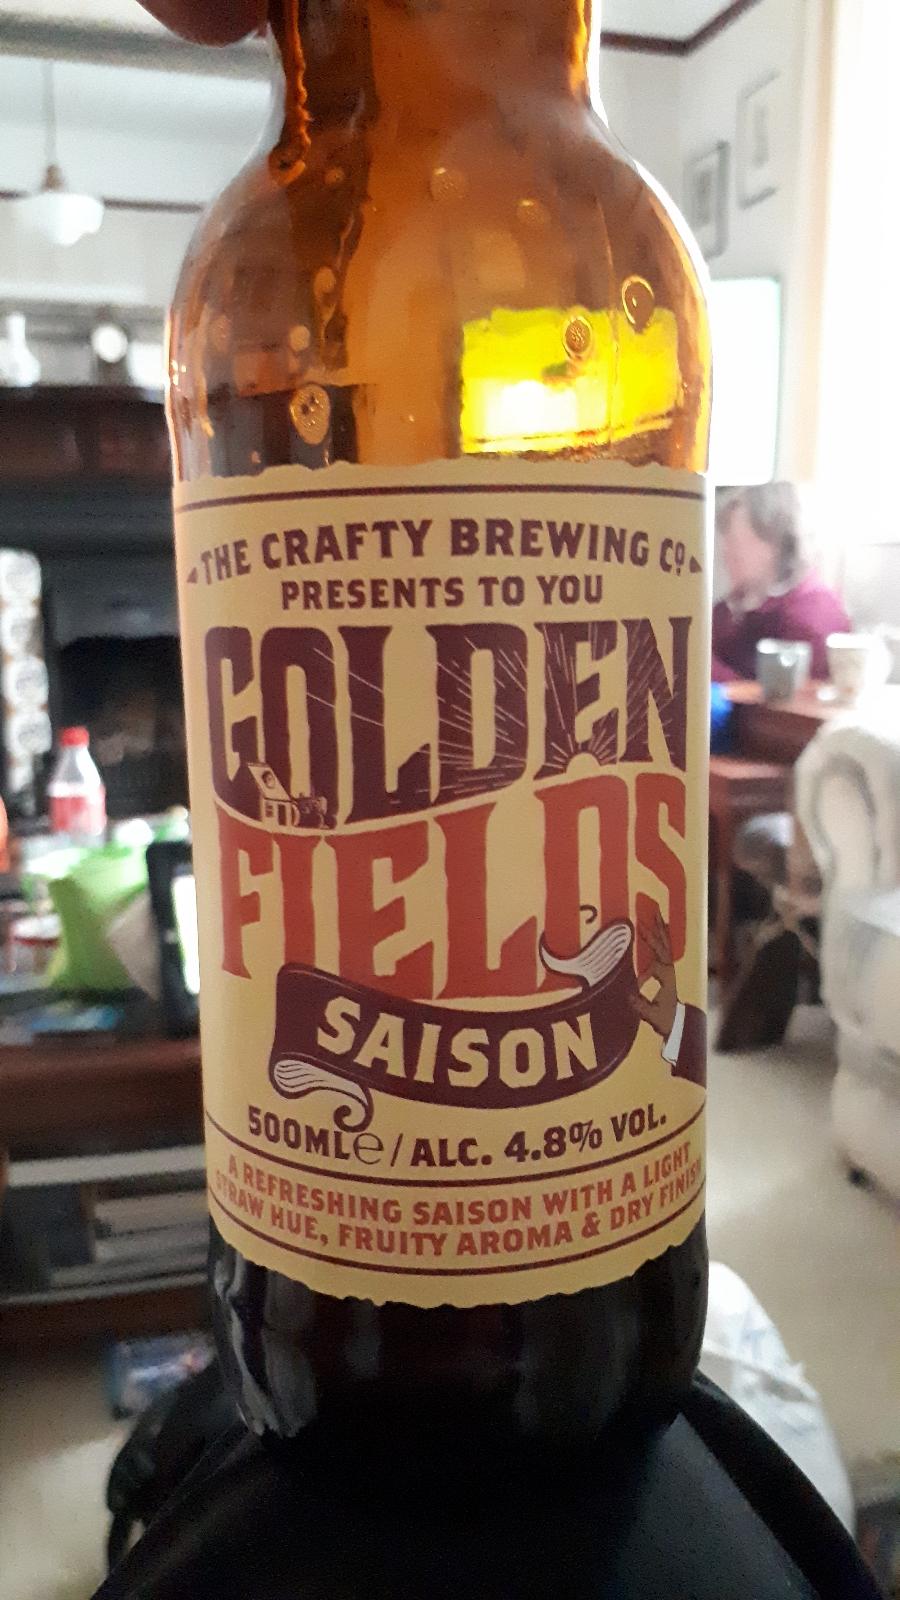 The Crafty Brewing Company Golden Fields Saison